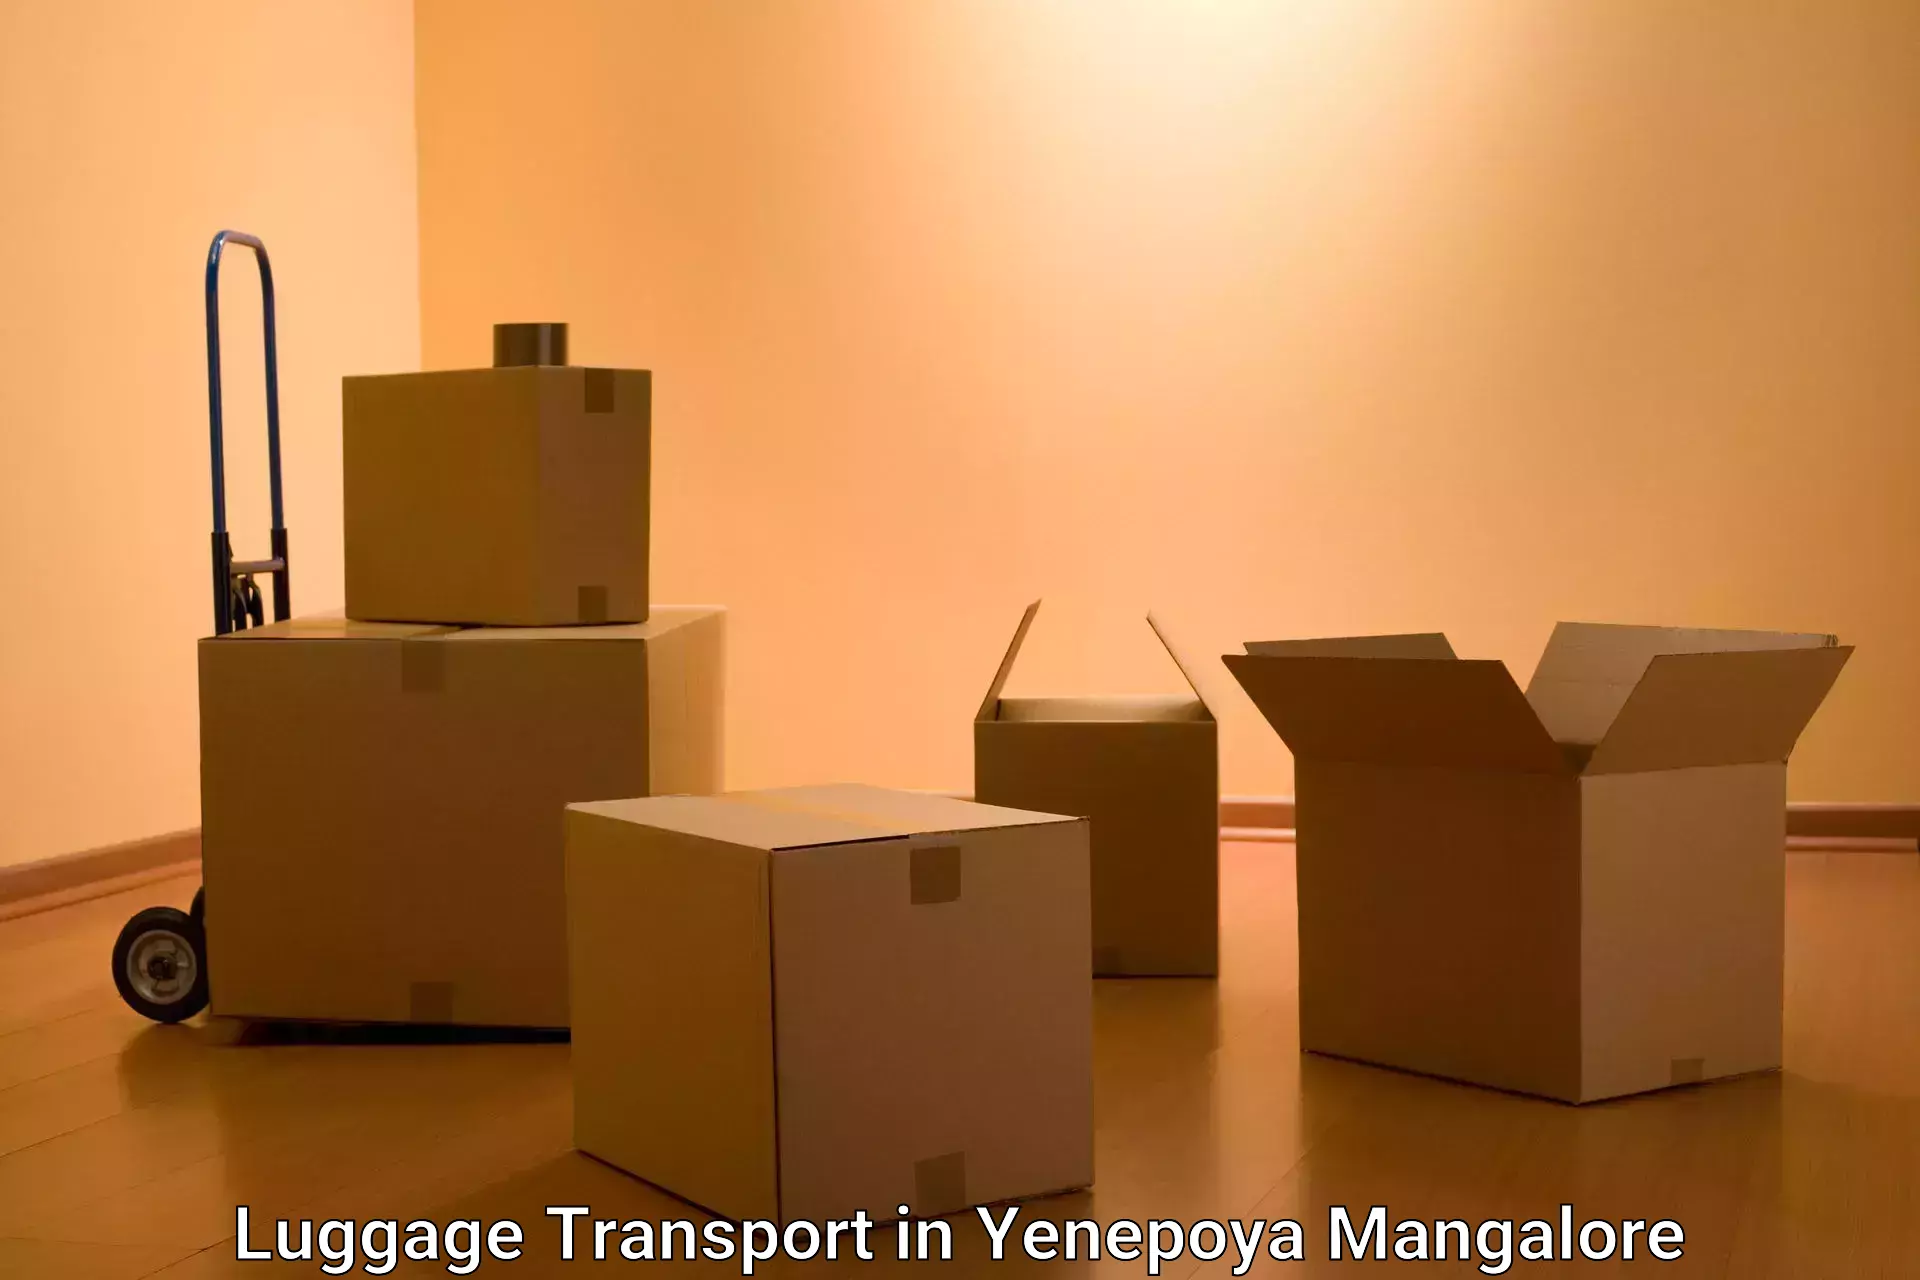 Luggage delivery operations in Yenepoya Mangalore